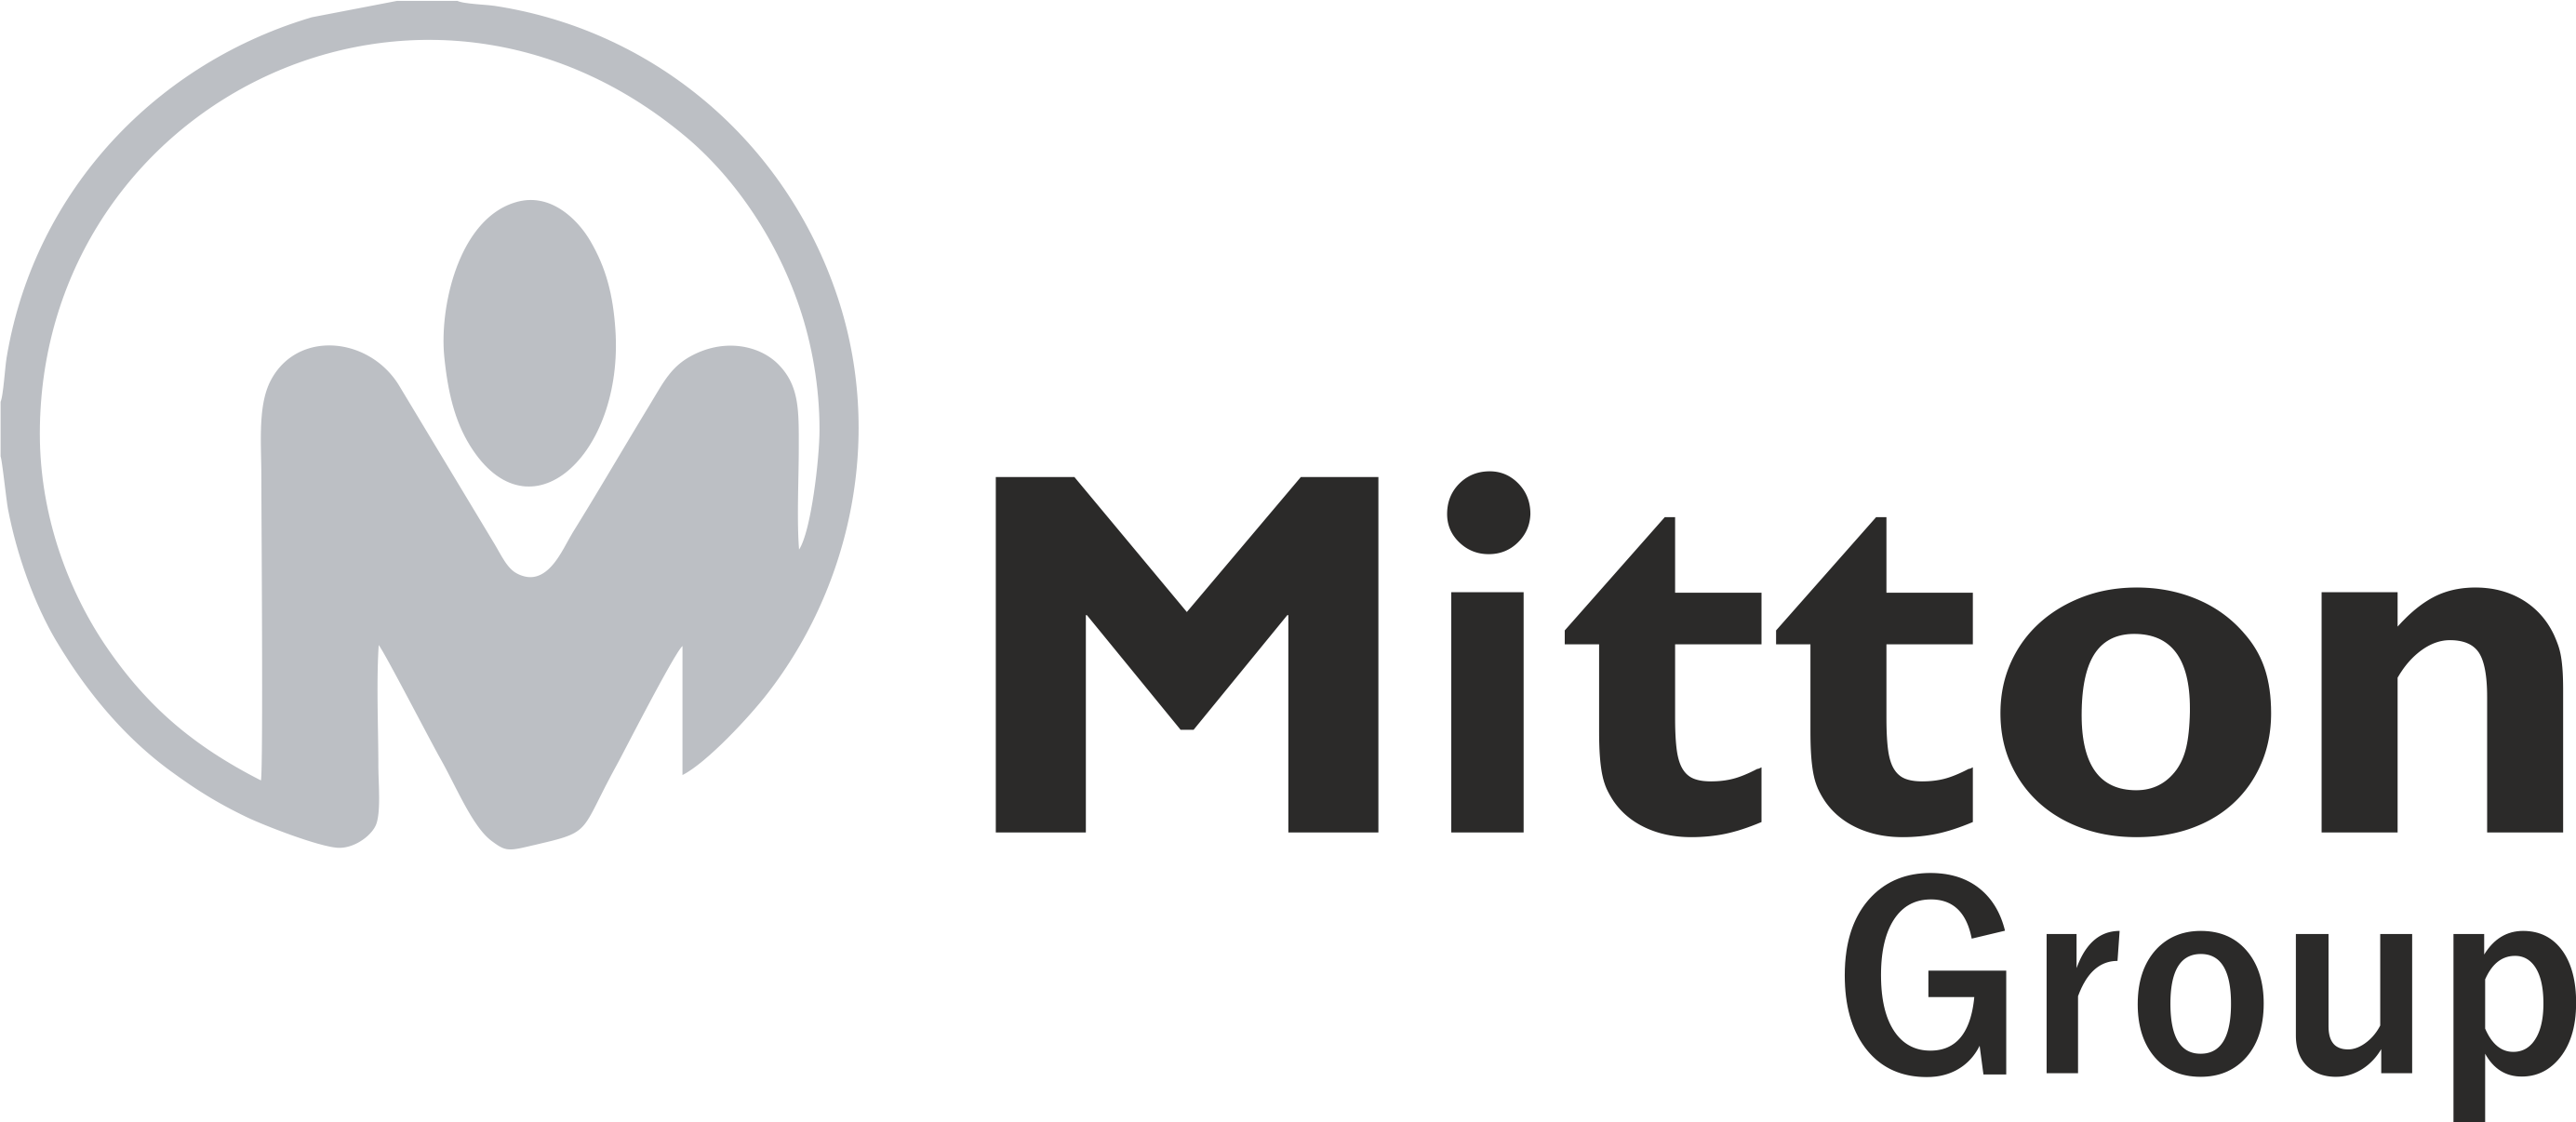 Mitton Image